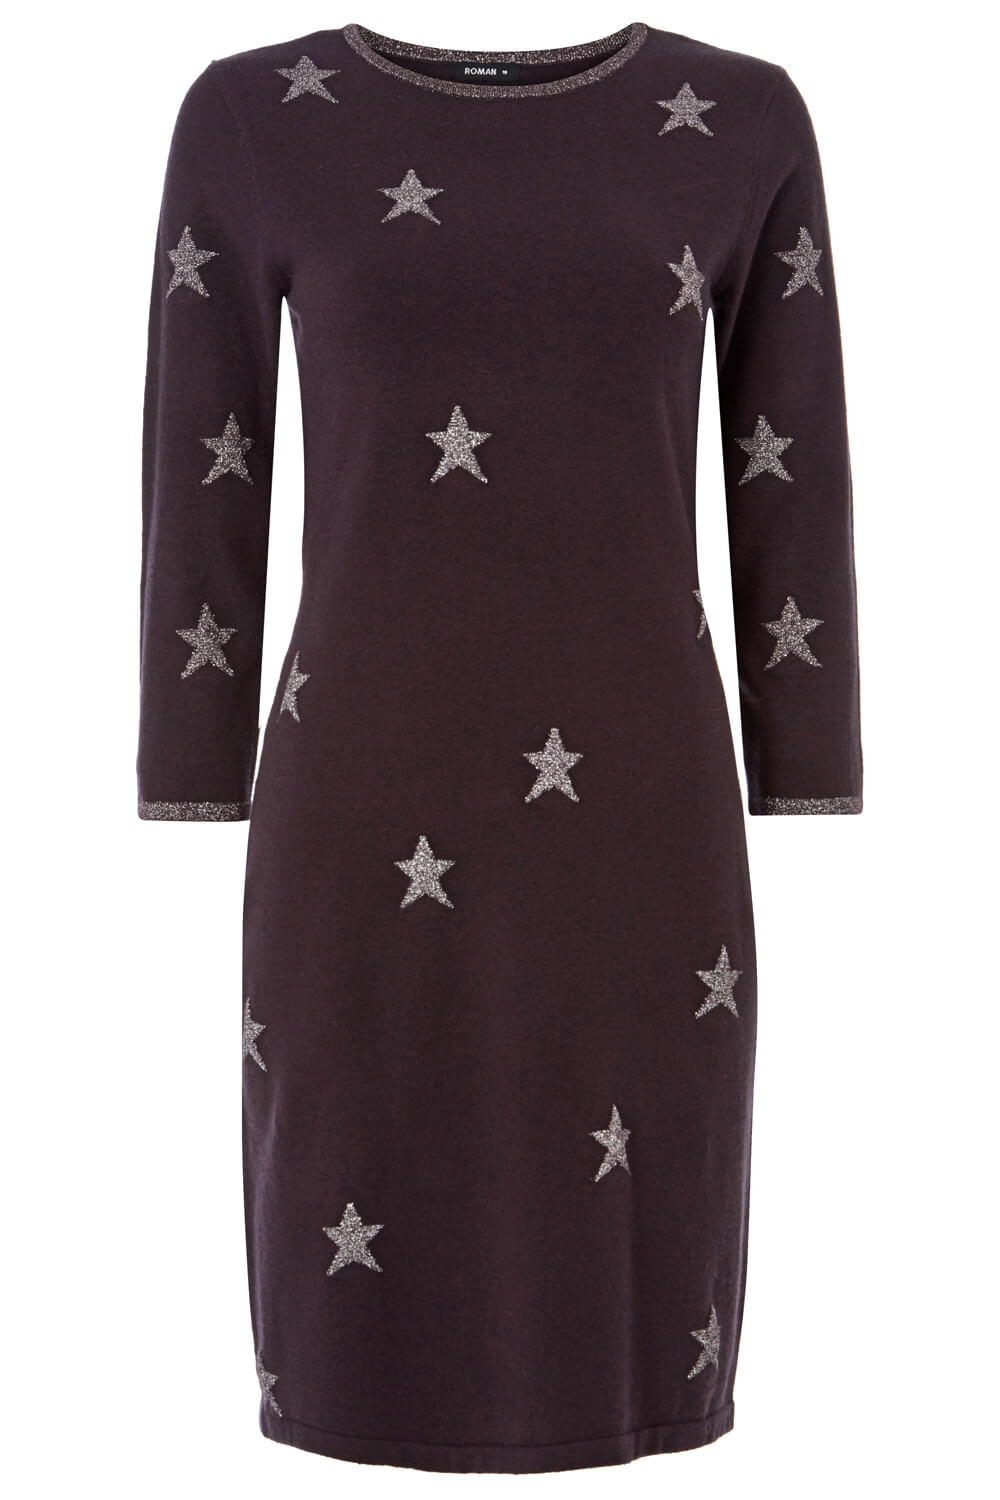 Grey Metallic Star Knitted Dress, Image 6 of 6